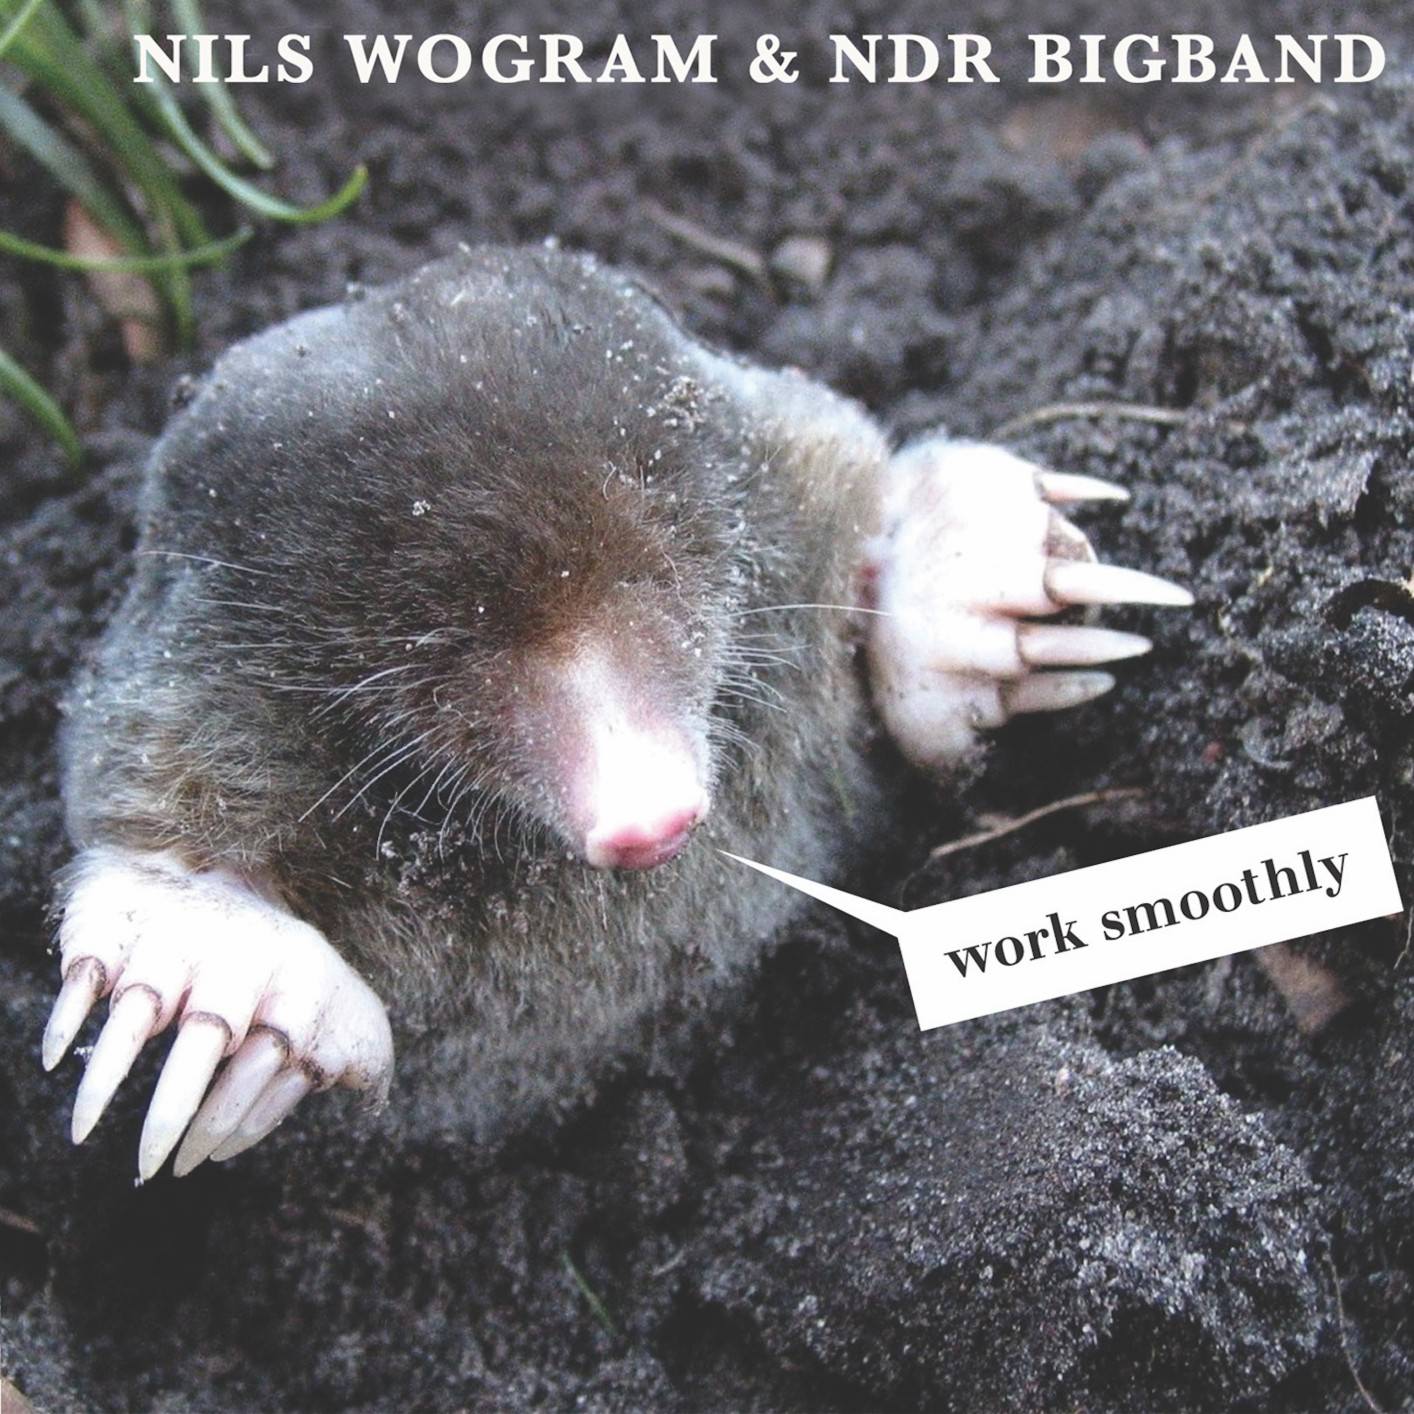 Nils Wogram & NDR Bigband - Work Smoothly (2018) [FLAC 24bit/44,1kHz]